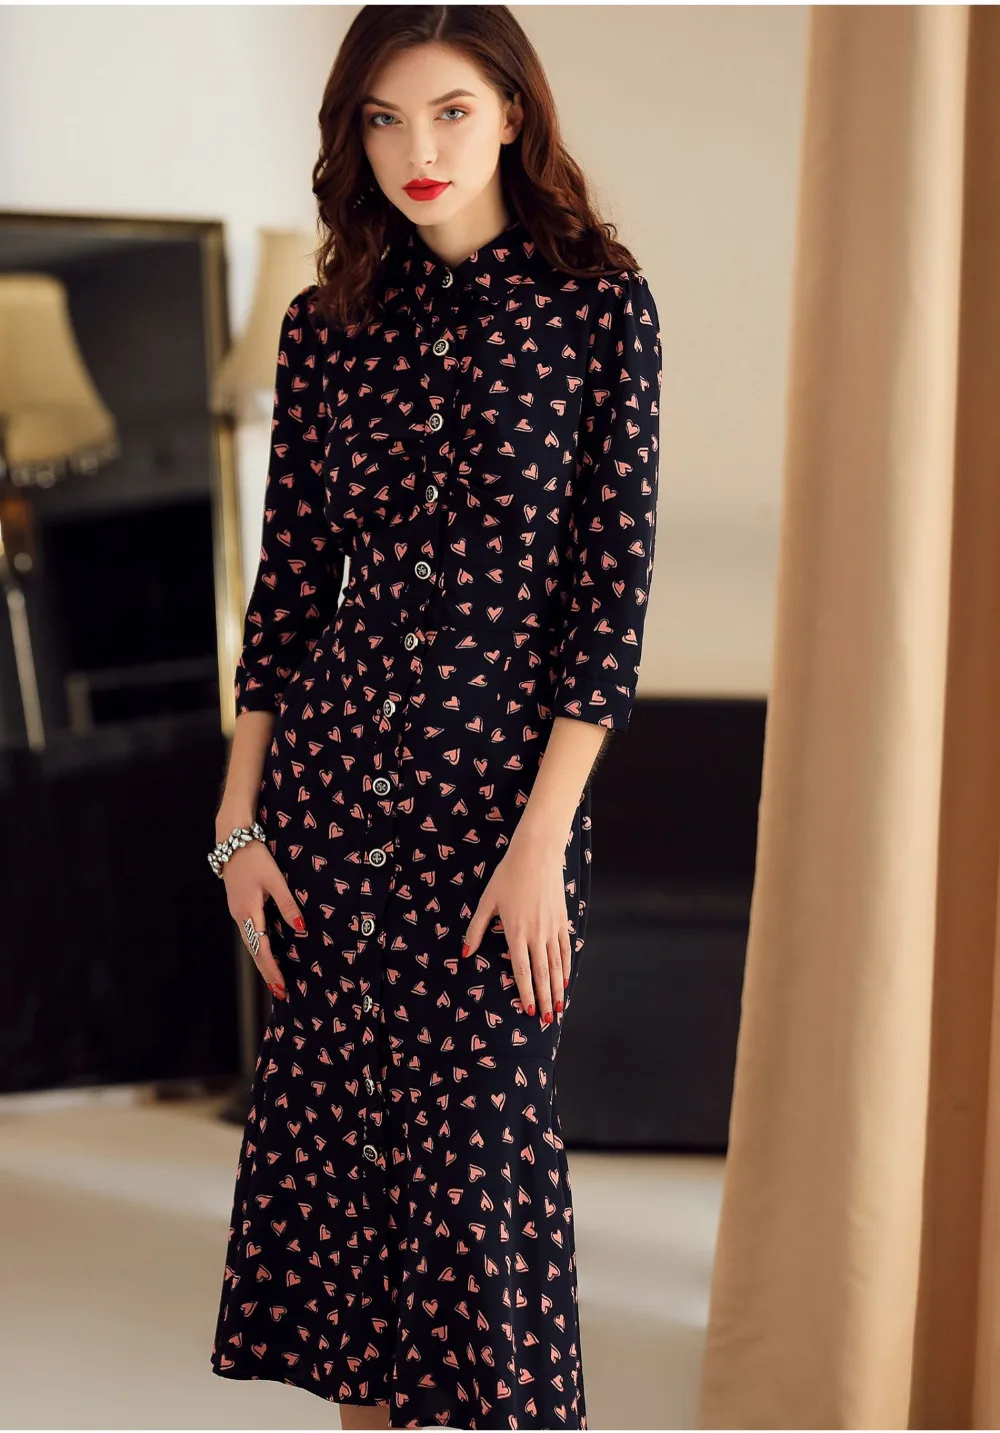 Elegant Dress Spring Woman 2020 New Vintage Dot Ruffles Turn Down Collar Sleeve Slim Mid Calf High Quality Female Dress Y67